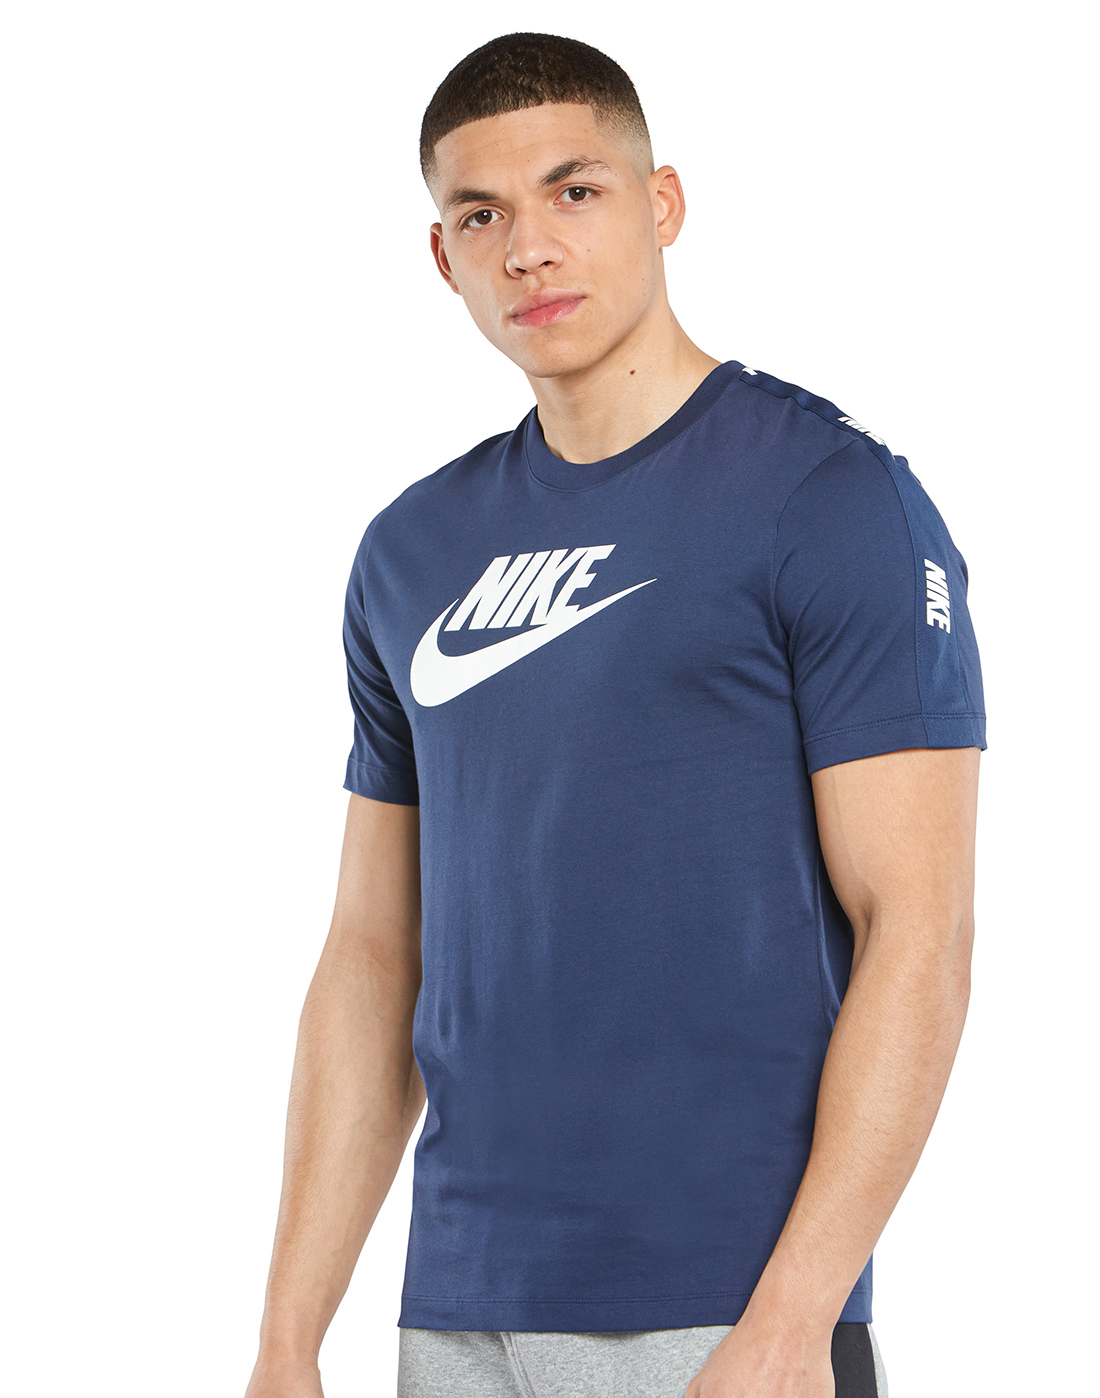 Nike Mens Hybrid T-Shirt - Navy | Life Style Sports IE